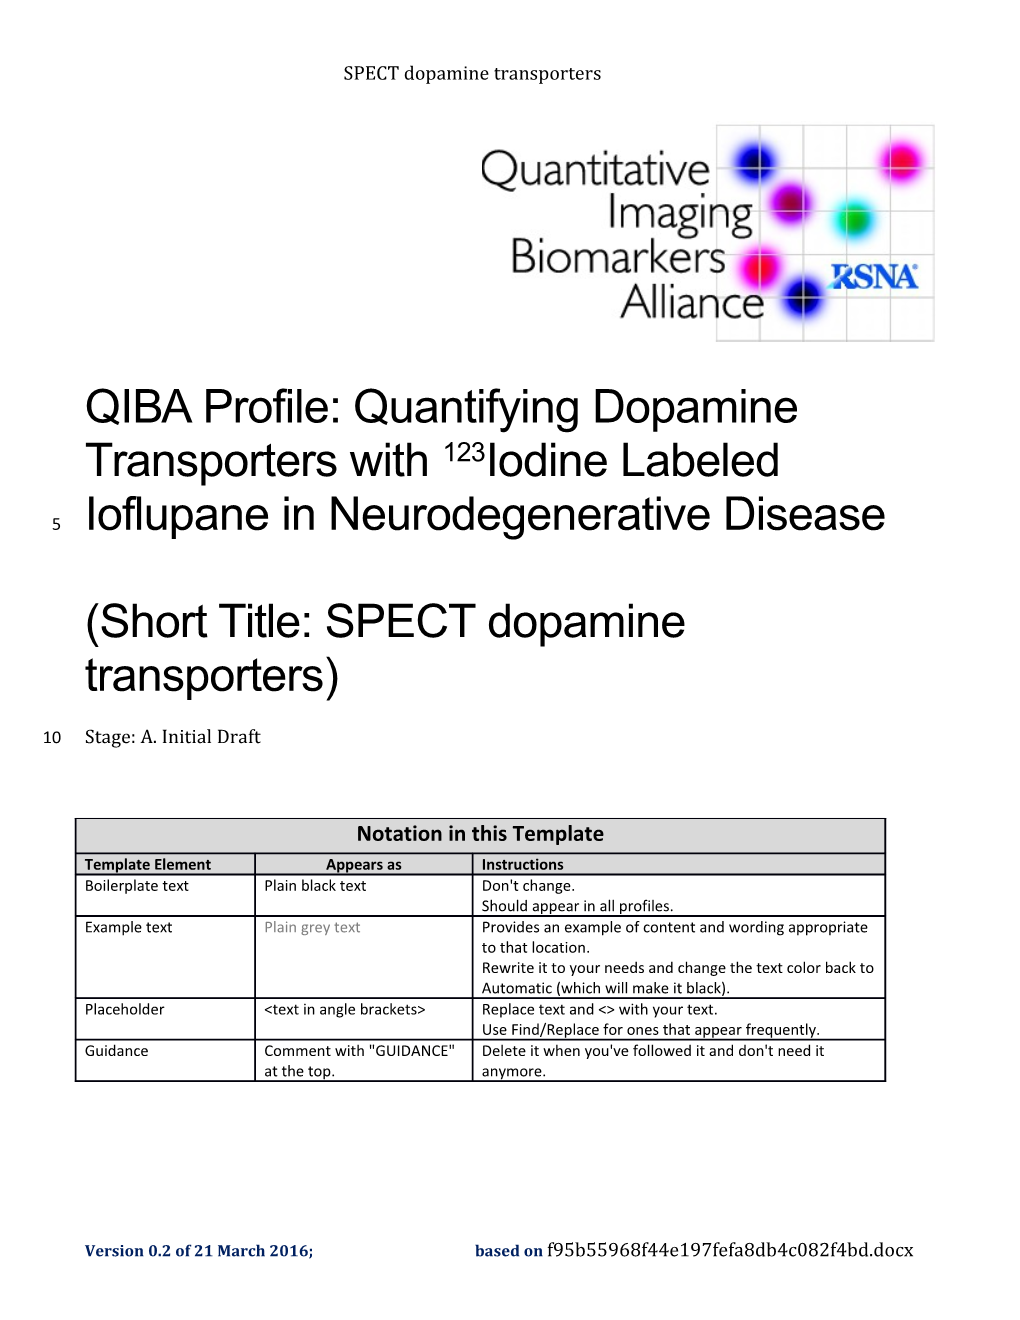 QIBA Profile: Quantifying Dopamine Transporters with 123Iodine Labeled Ioflupane In